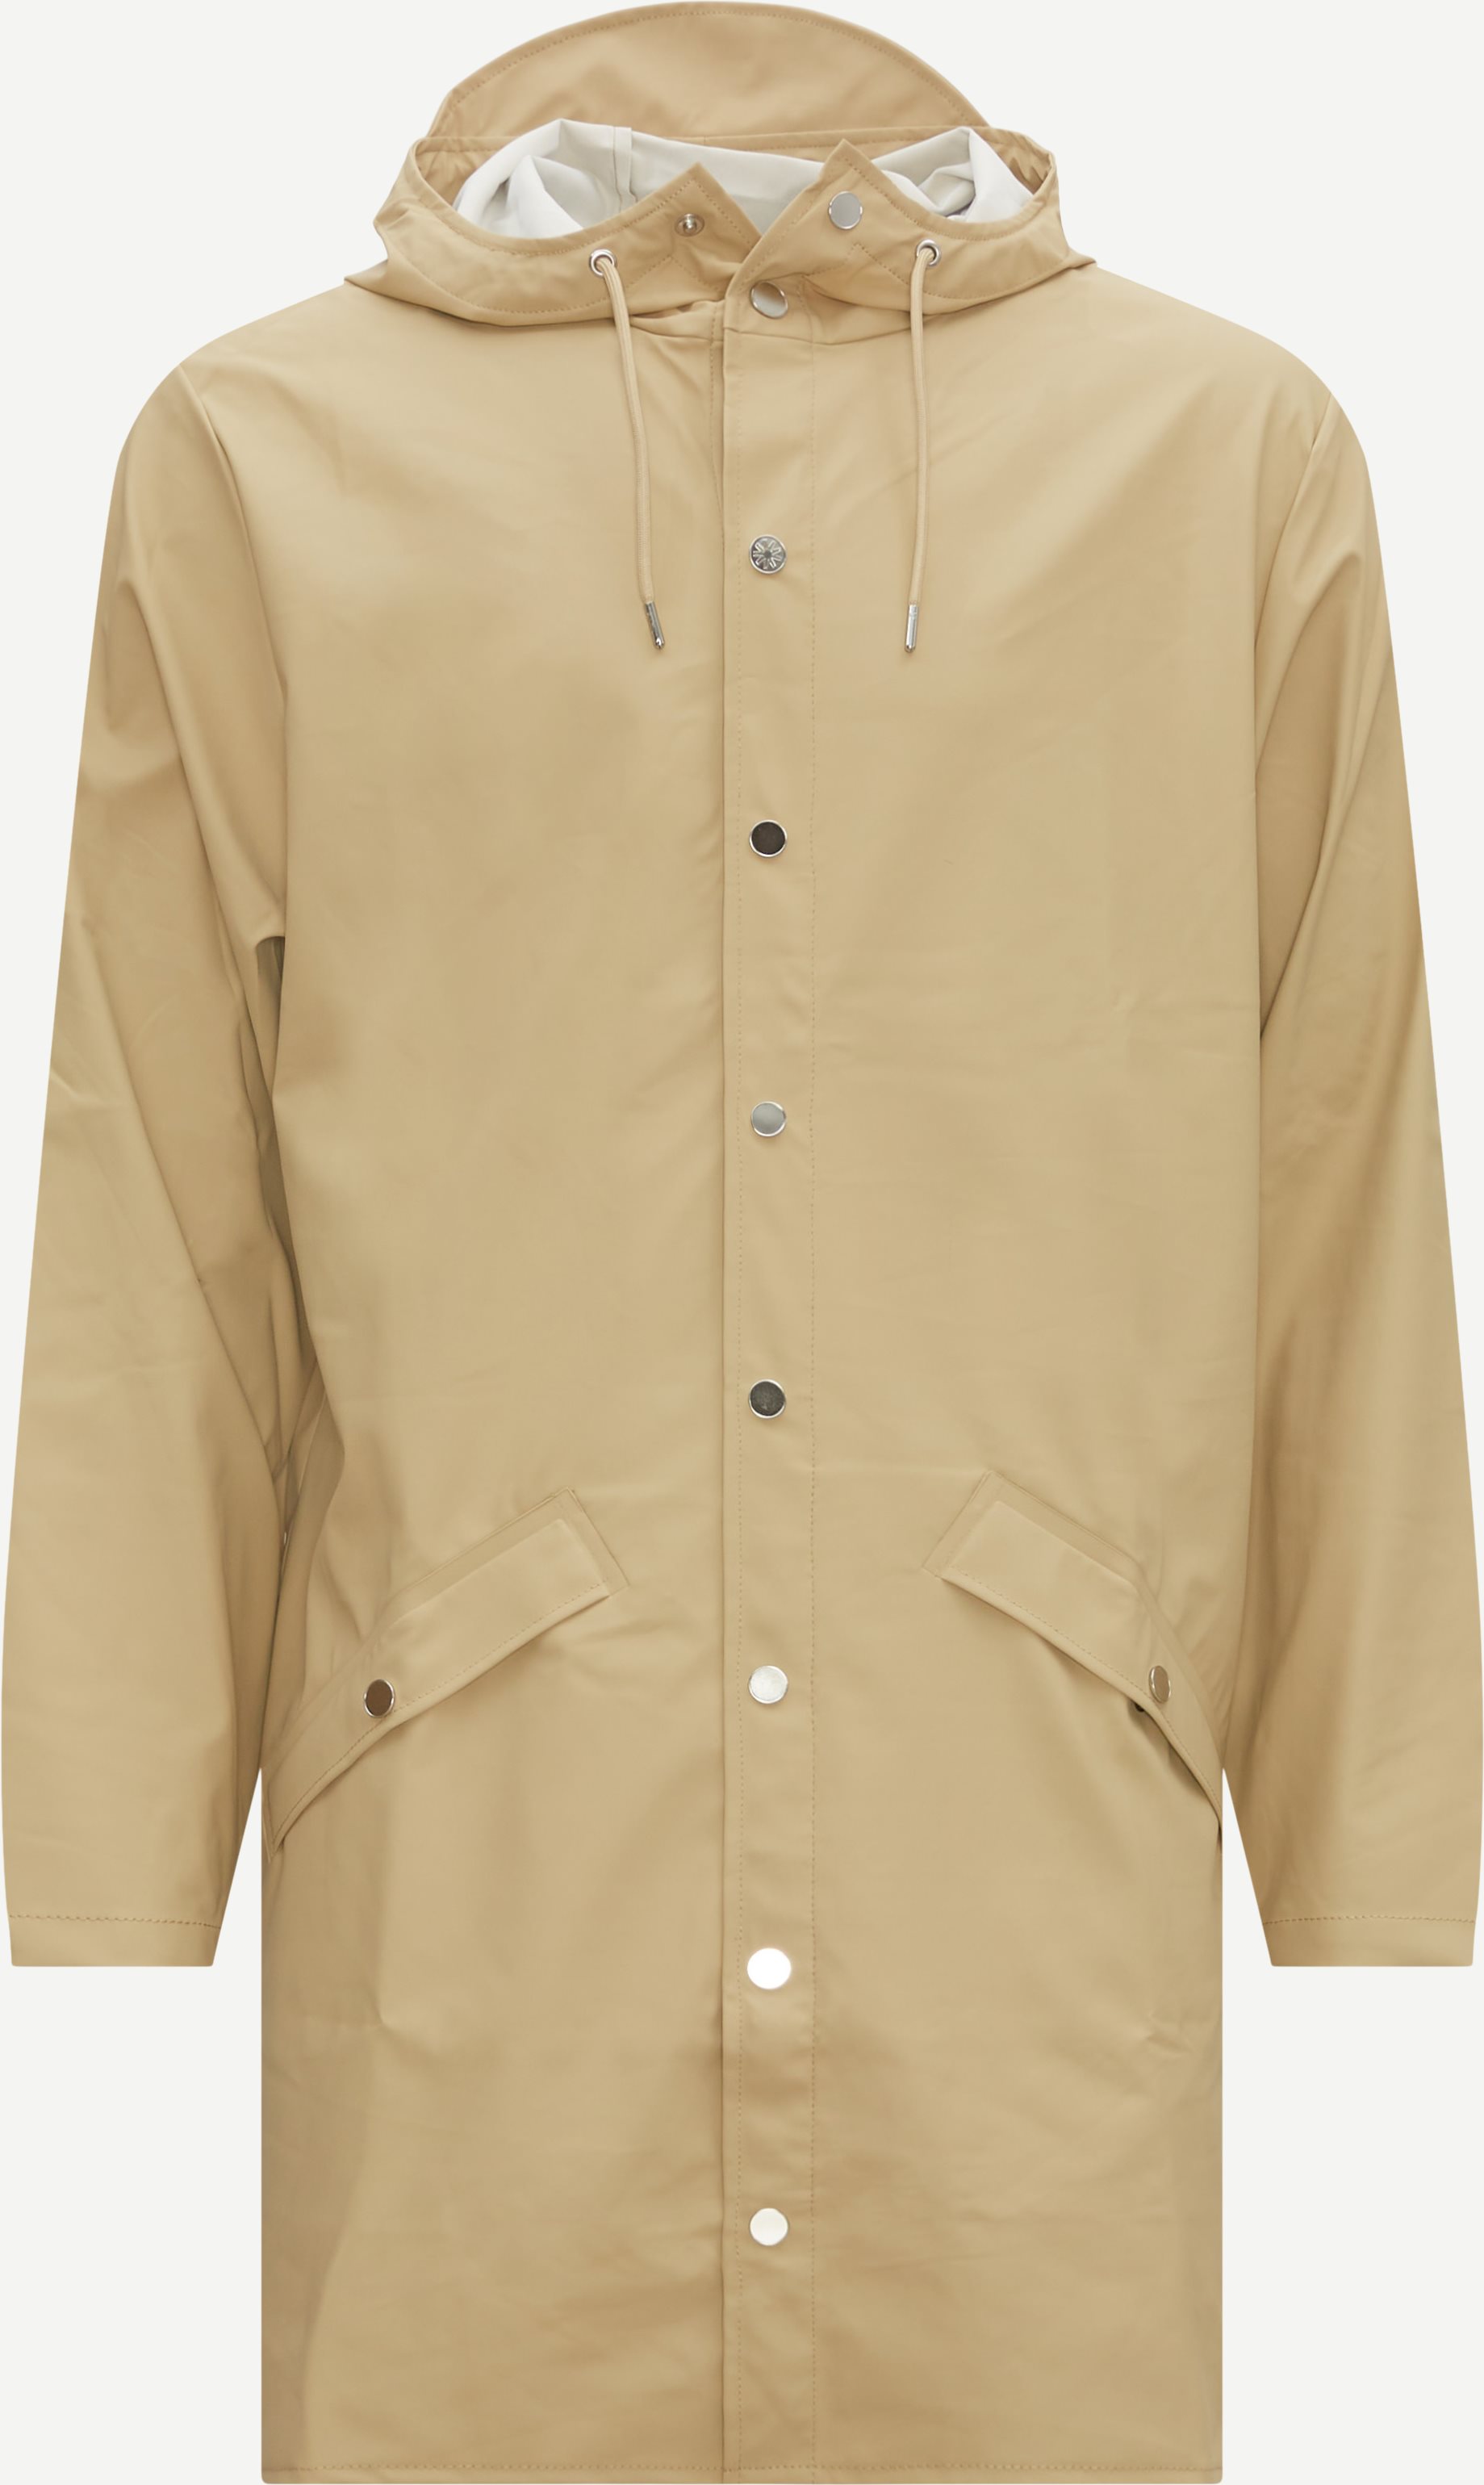 Rains Jackets, Coats & Pants | Buy online at Kaufmann